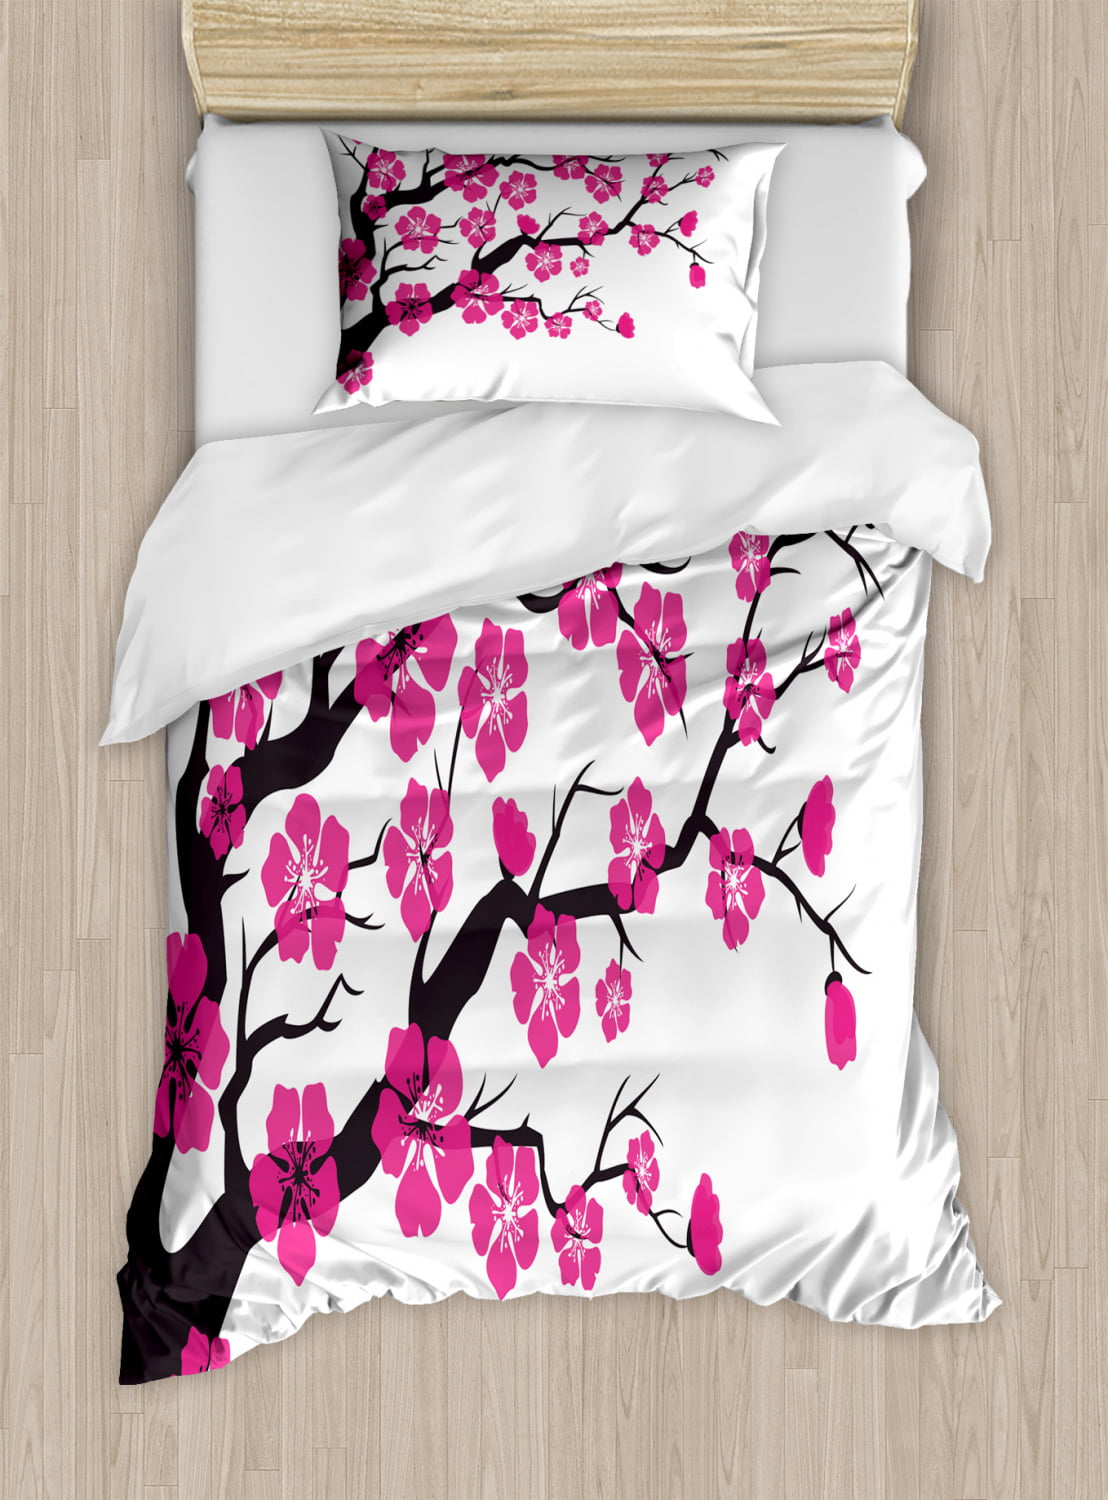 Cherry Blossom Duvet Cover Set Twin, Twin Cherry Blossom Bedding Set